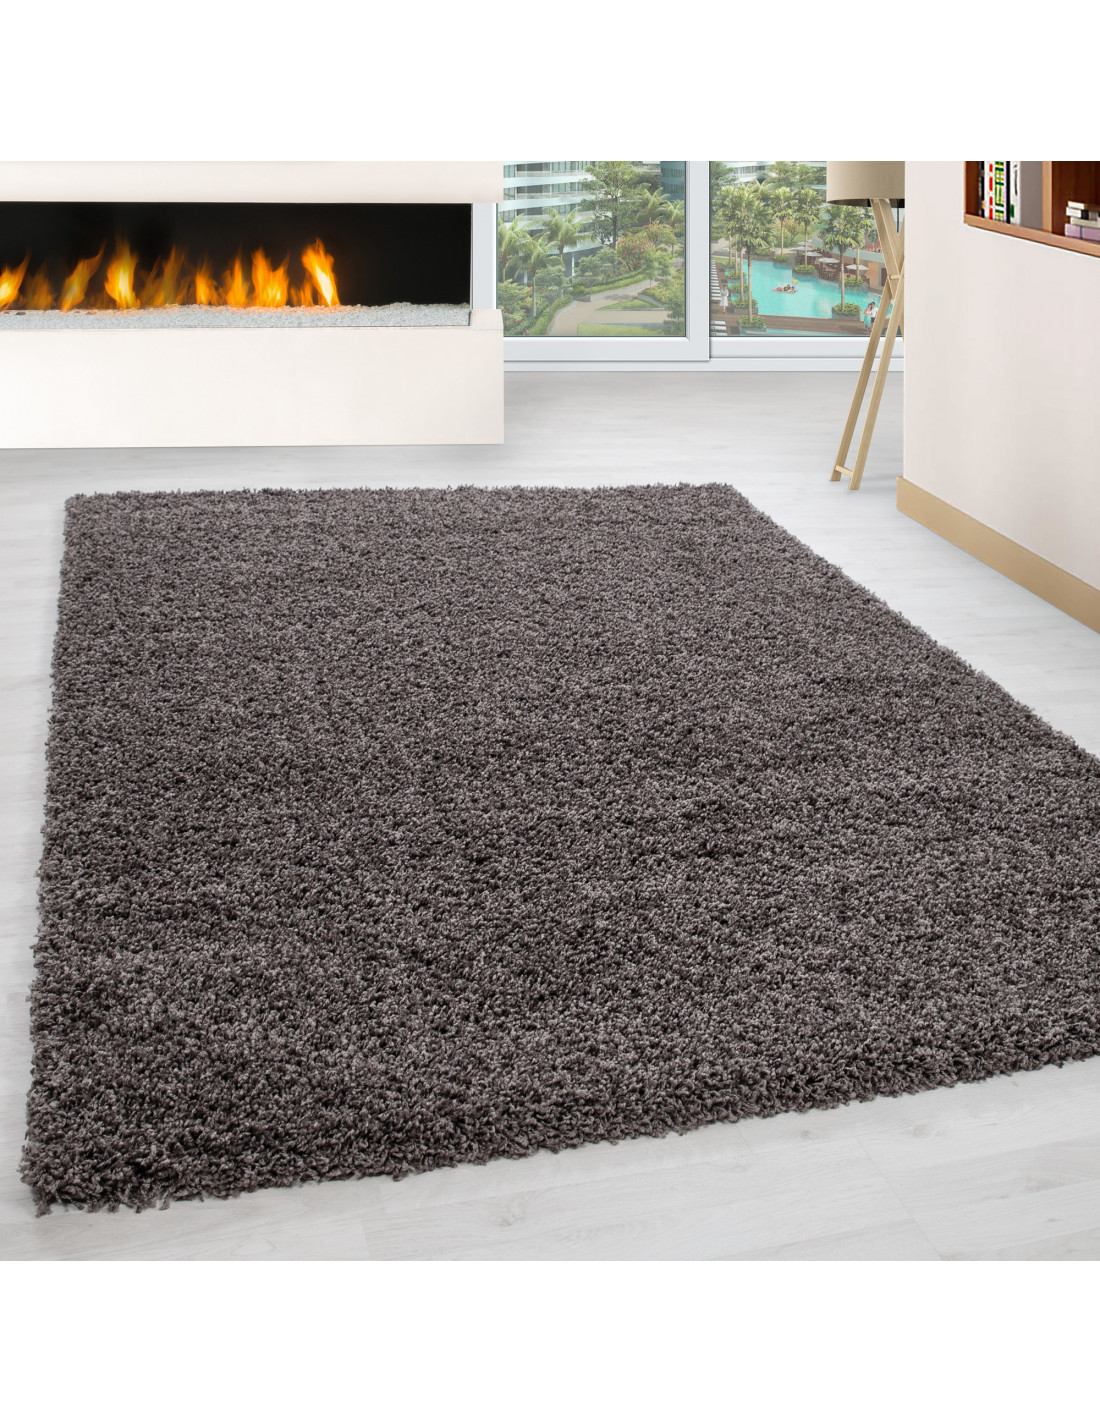 Shaggy carpet, pile height 3cm, plain taupe